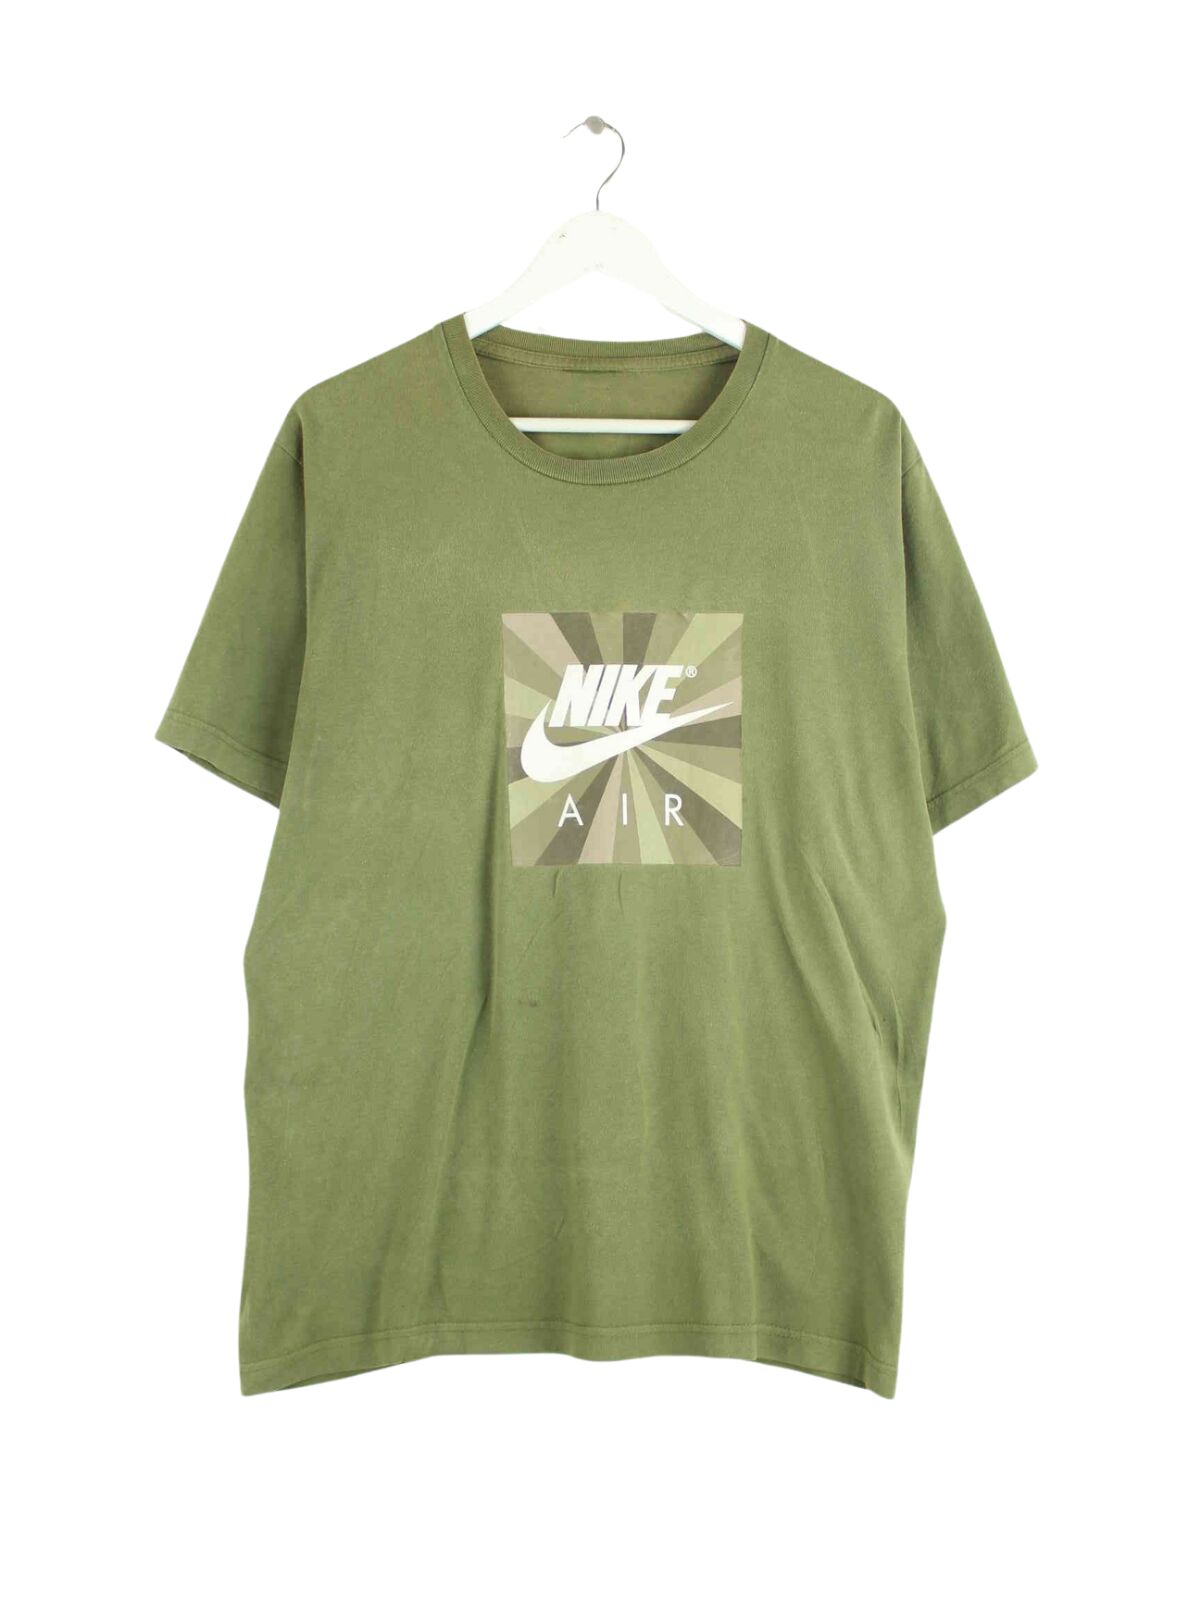 Nike Air Print T-Shirt Khaki M (front image)